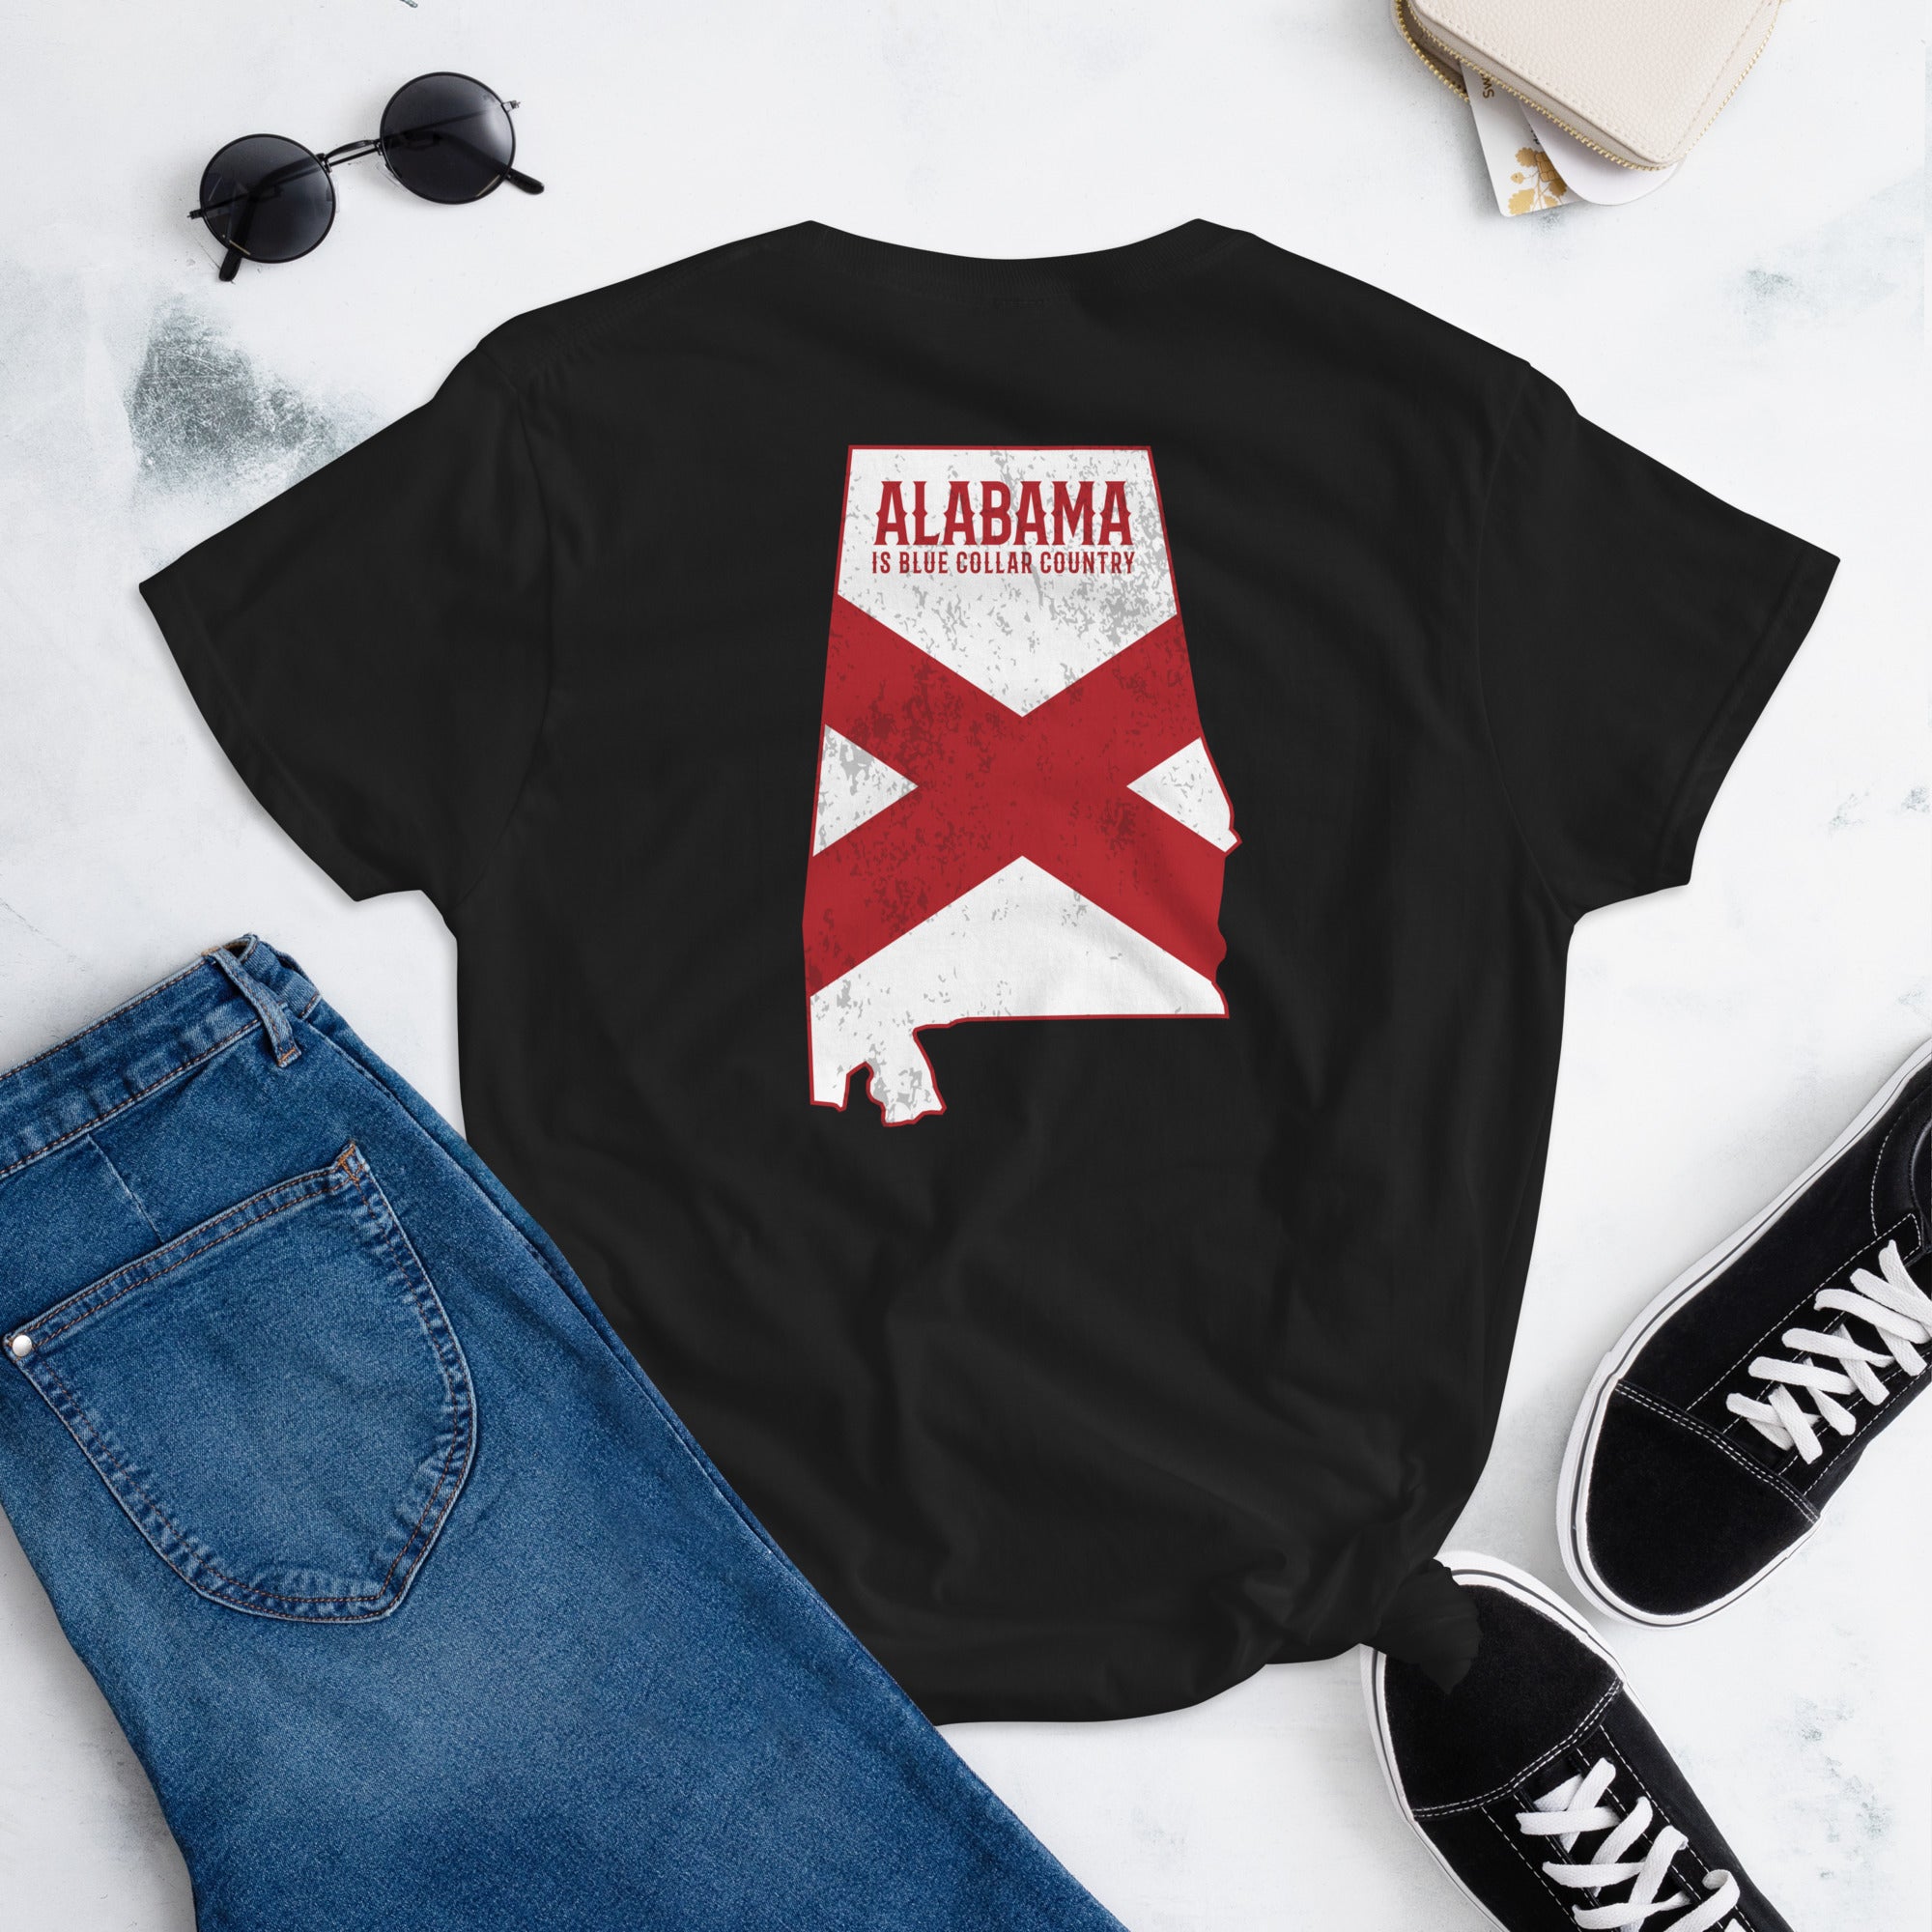 Alabama is Blue Collar Country  I  Women's short sleeve t-shirt